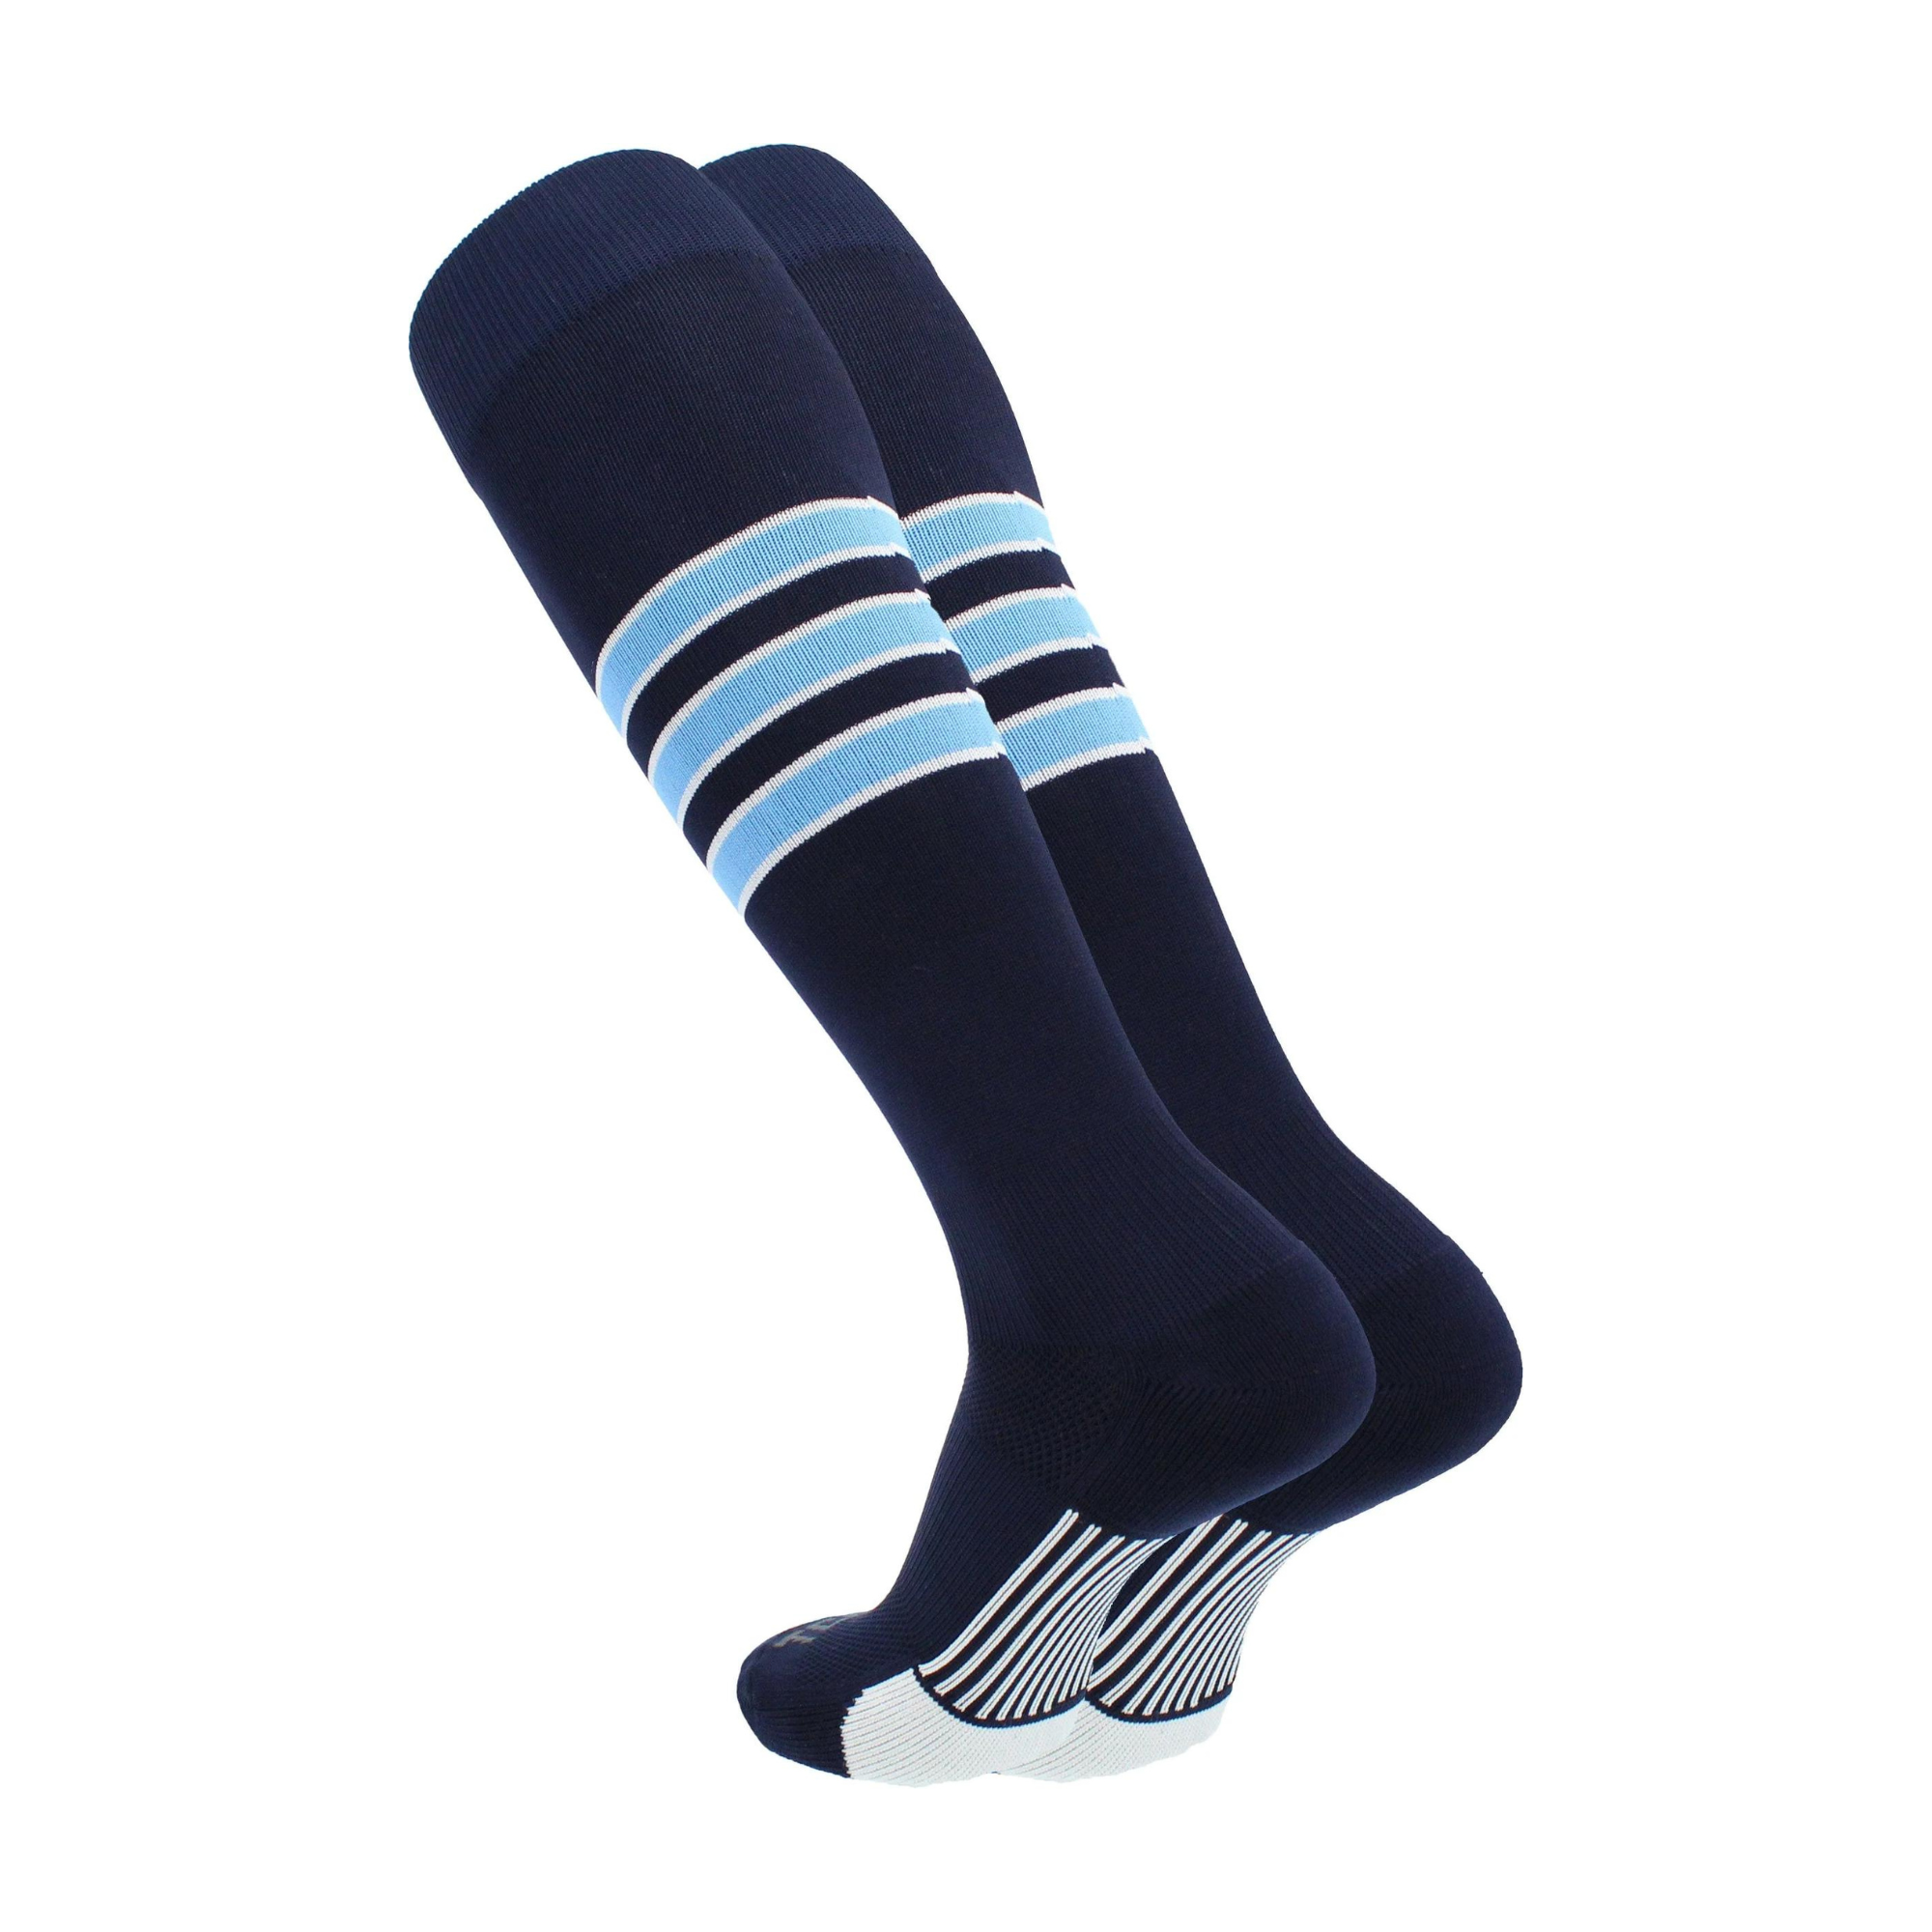 TCK Dugout Series OTC Baseball Socks Navy/Blue L